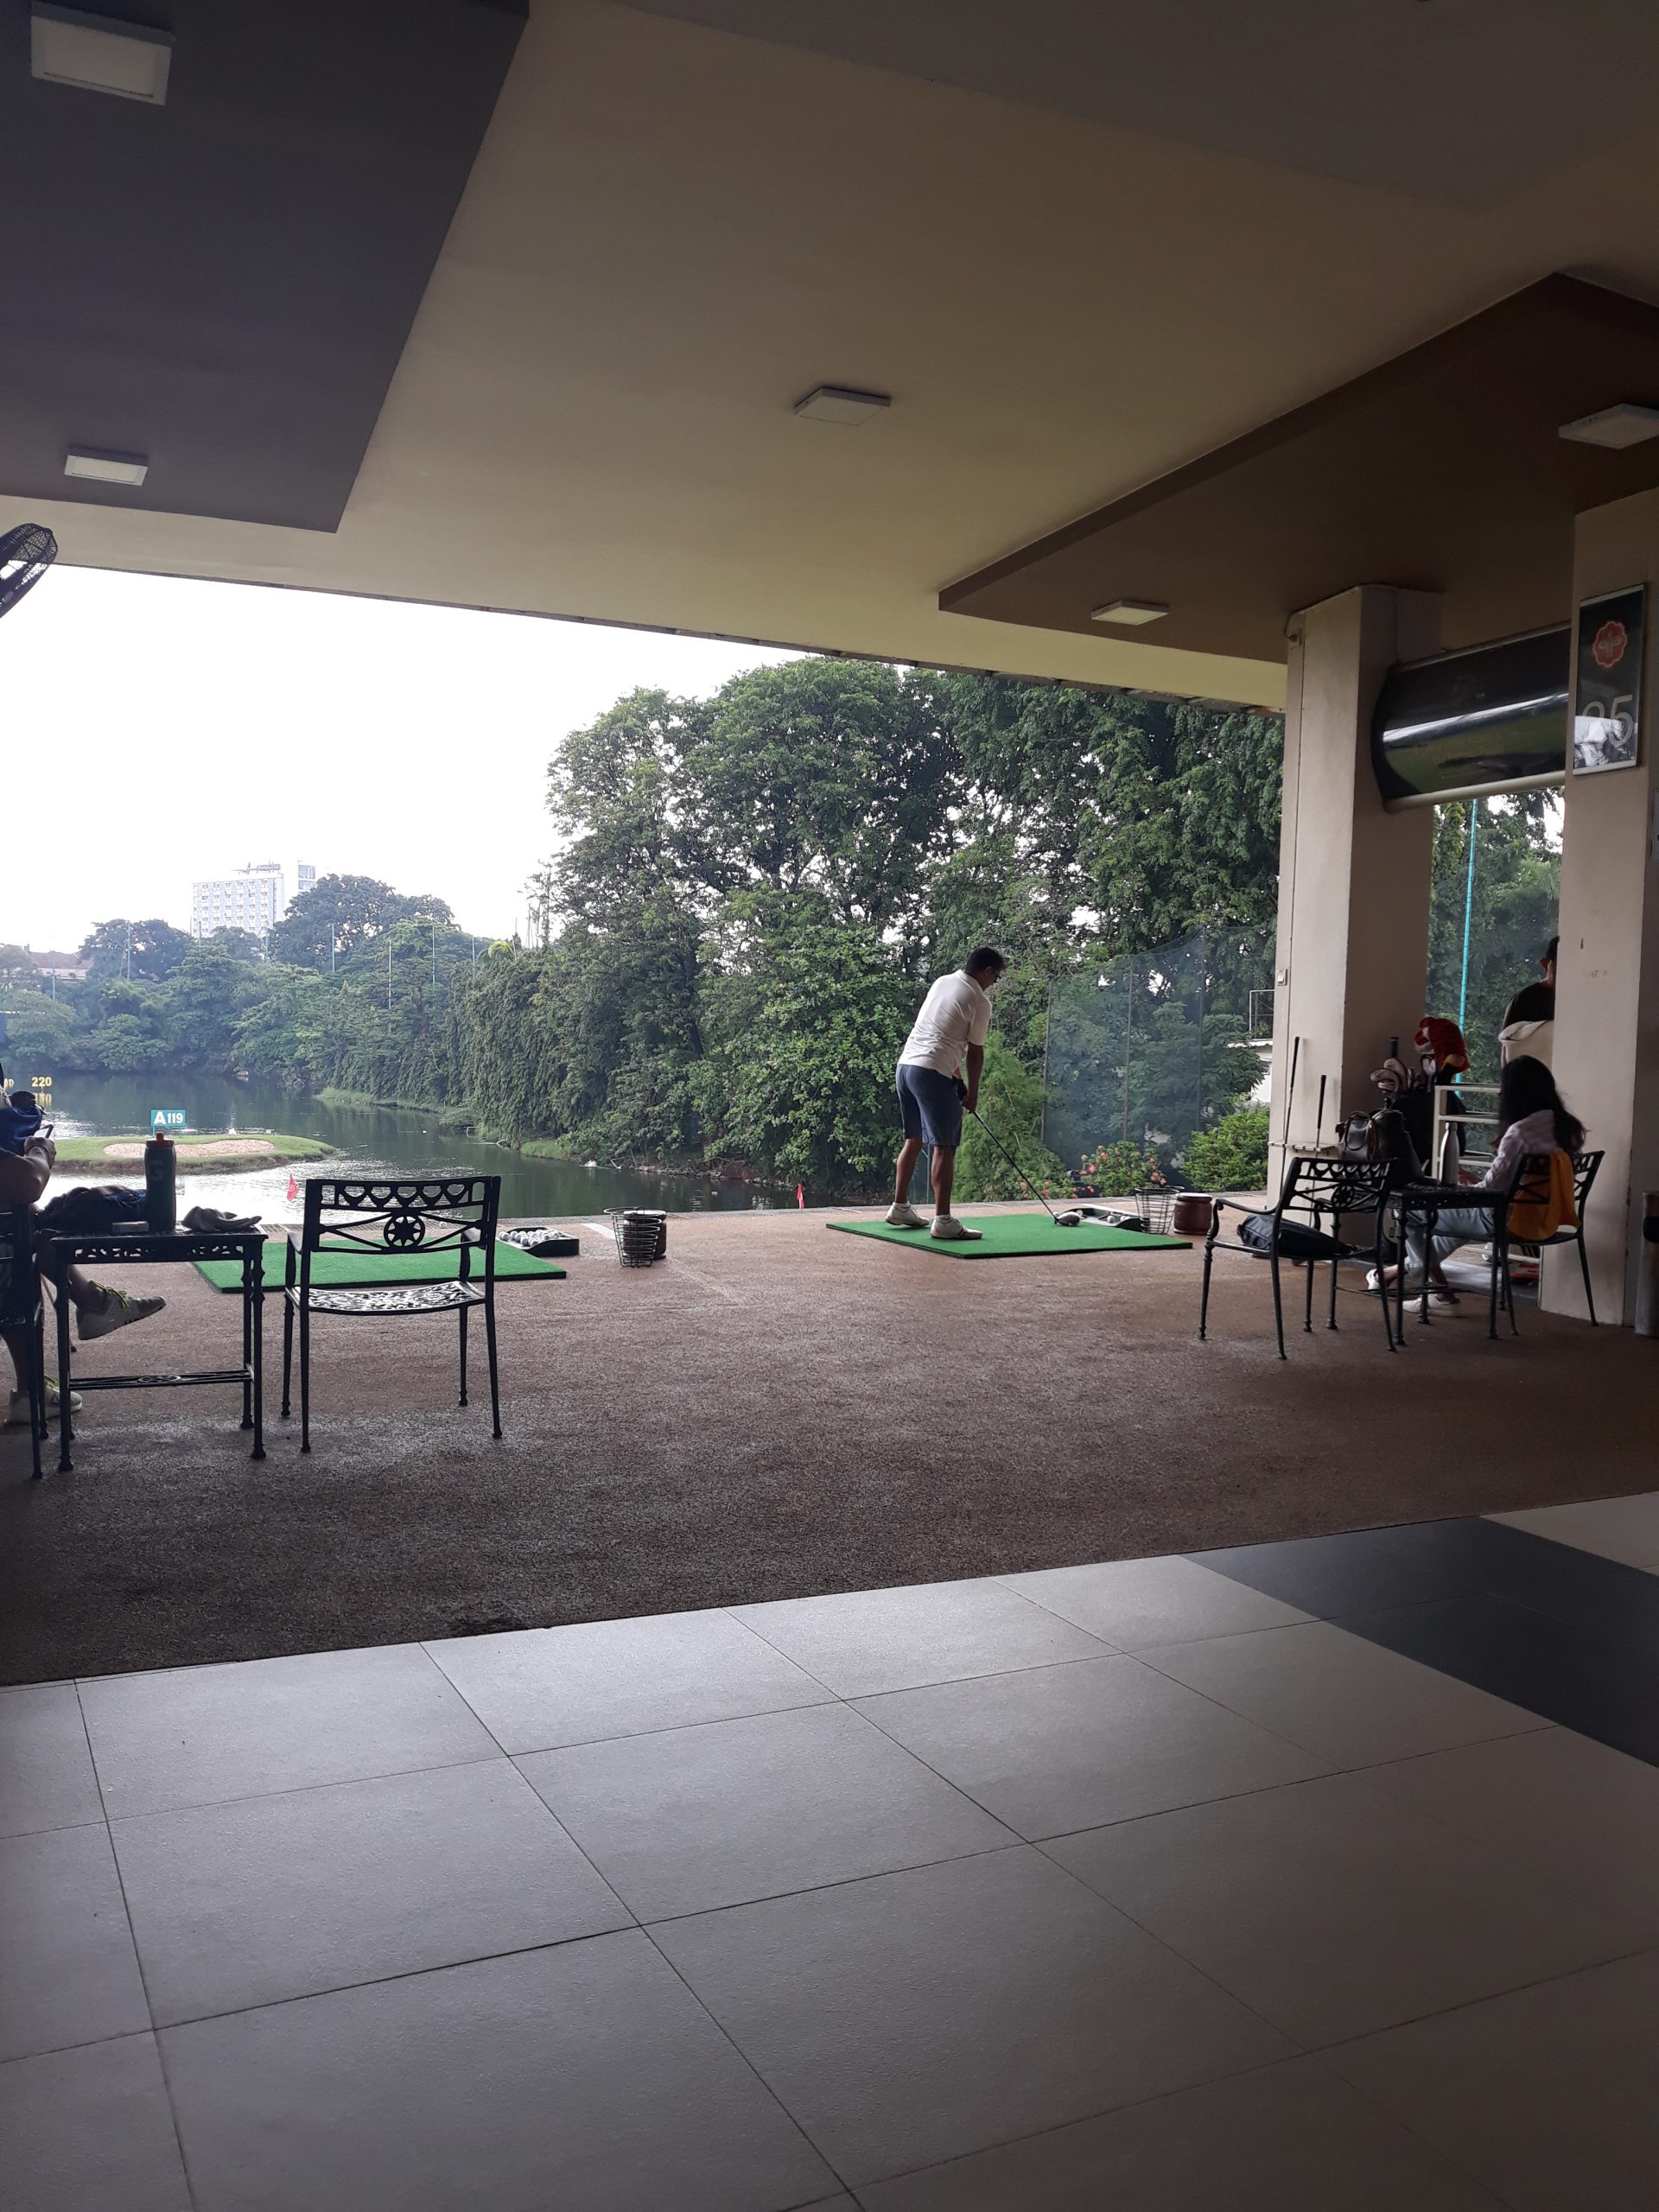 Berapa Tarif Main Golf di Pondok Indah Jakarta Selatan ?